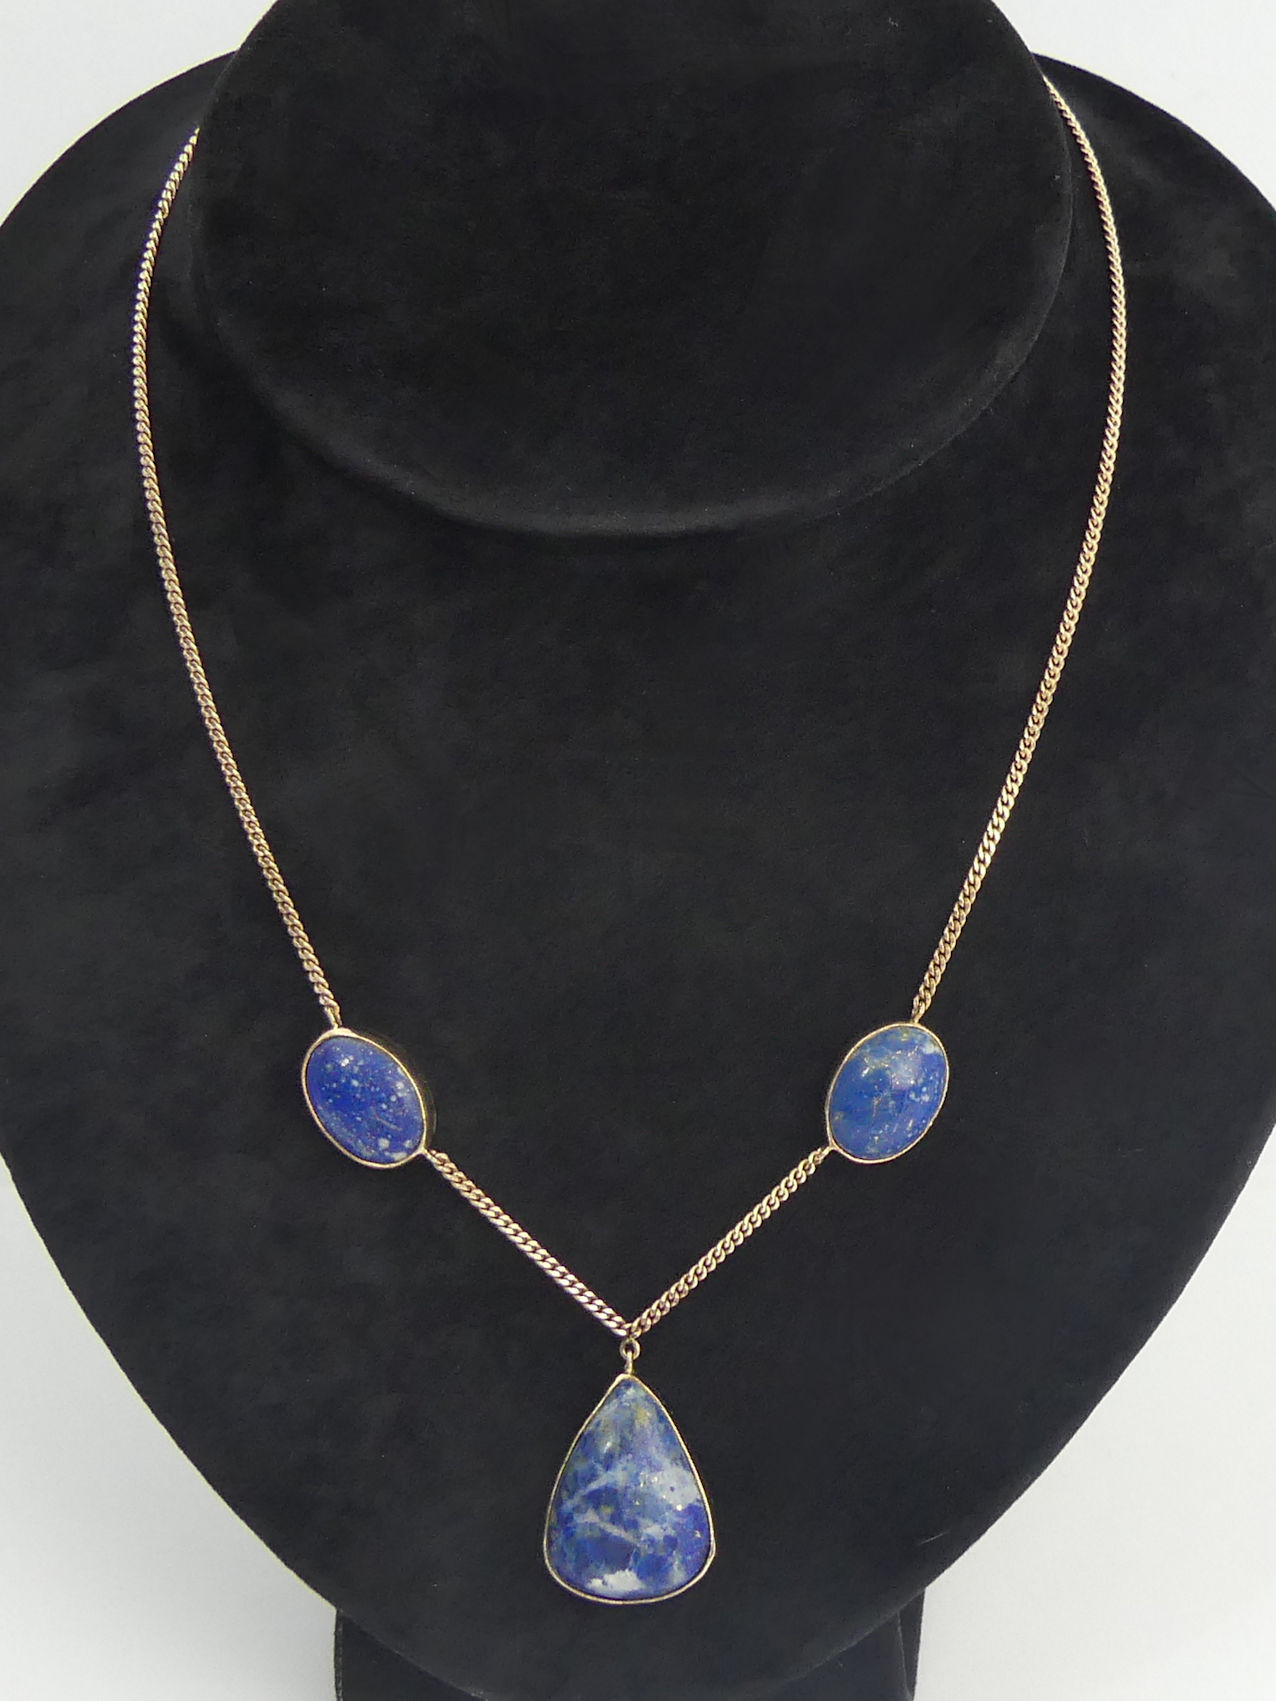 9ct rose gold lapis set necklace, 13.5 grams, 43.5 cm long, drop 25 mm. Uk Postage £12. - Image 2 of 5